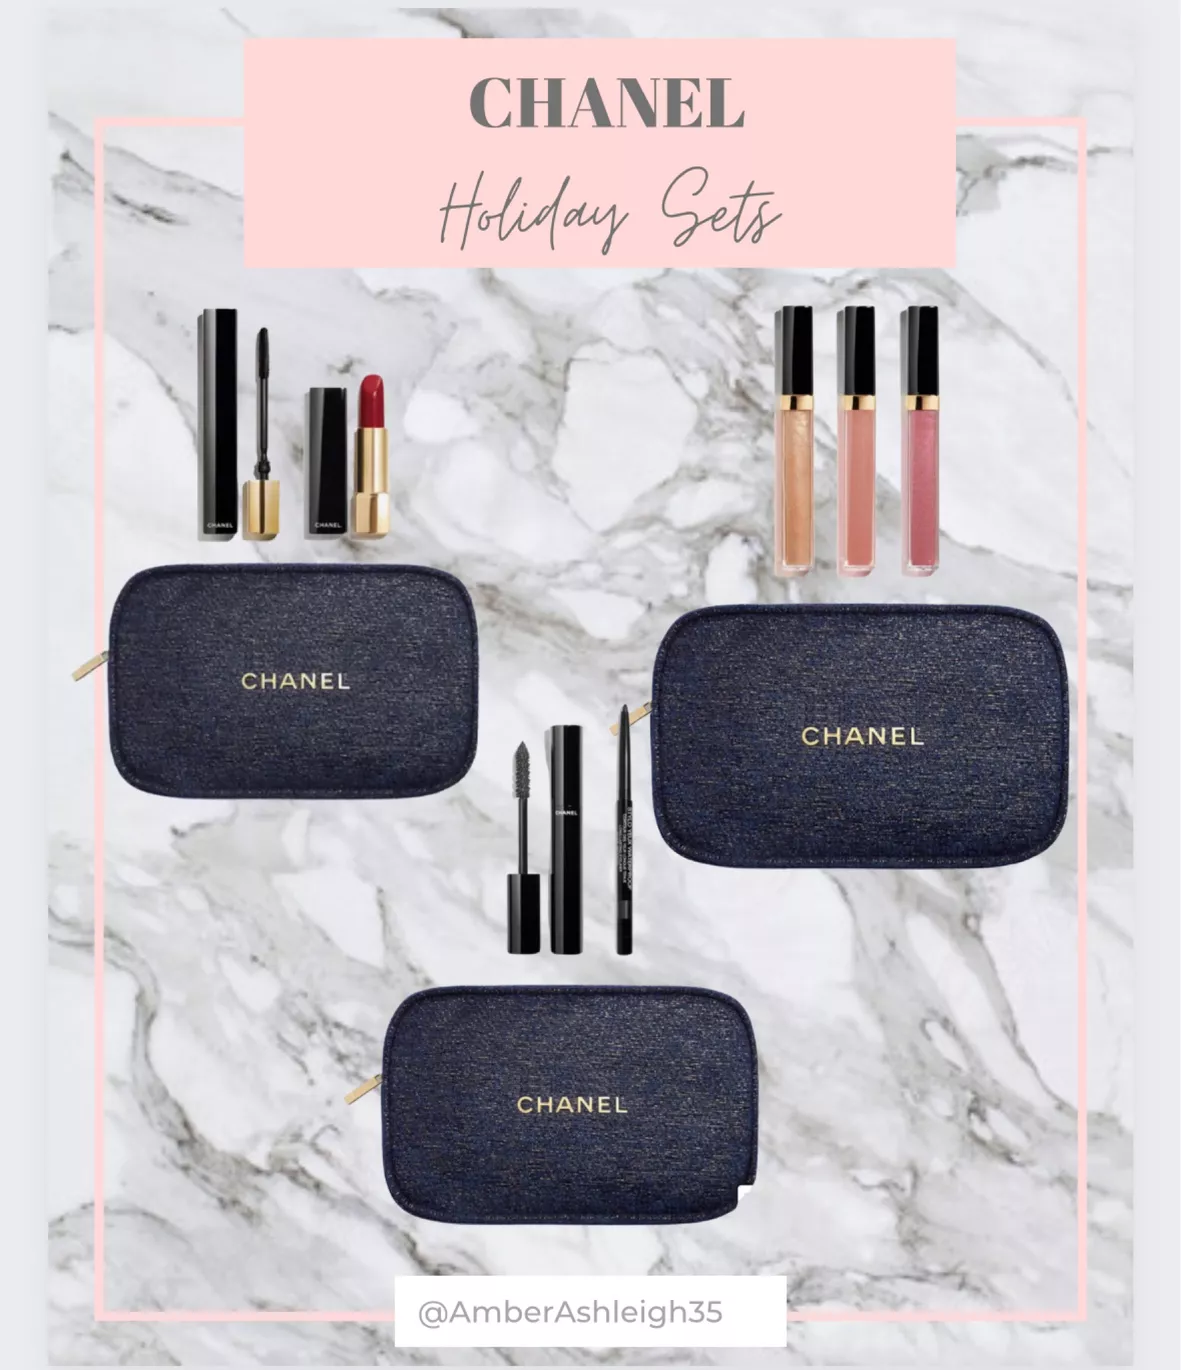 CHANEL, Makeup, Chanel Holiday Gift Set 223 Lipgloss Trio